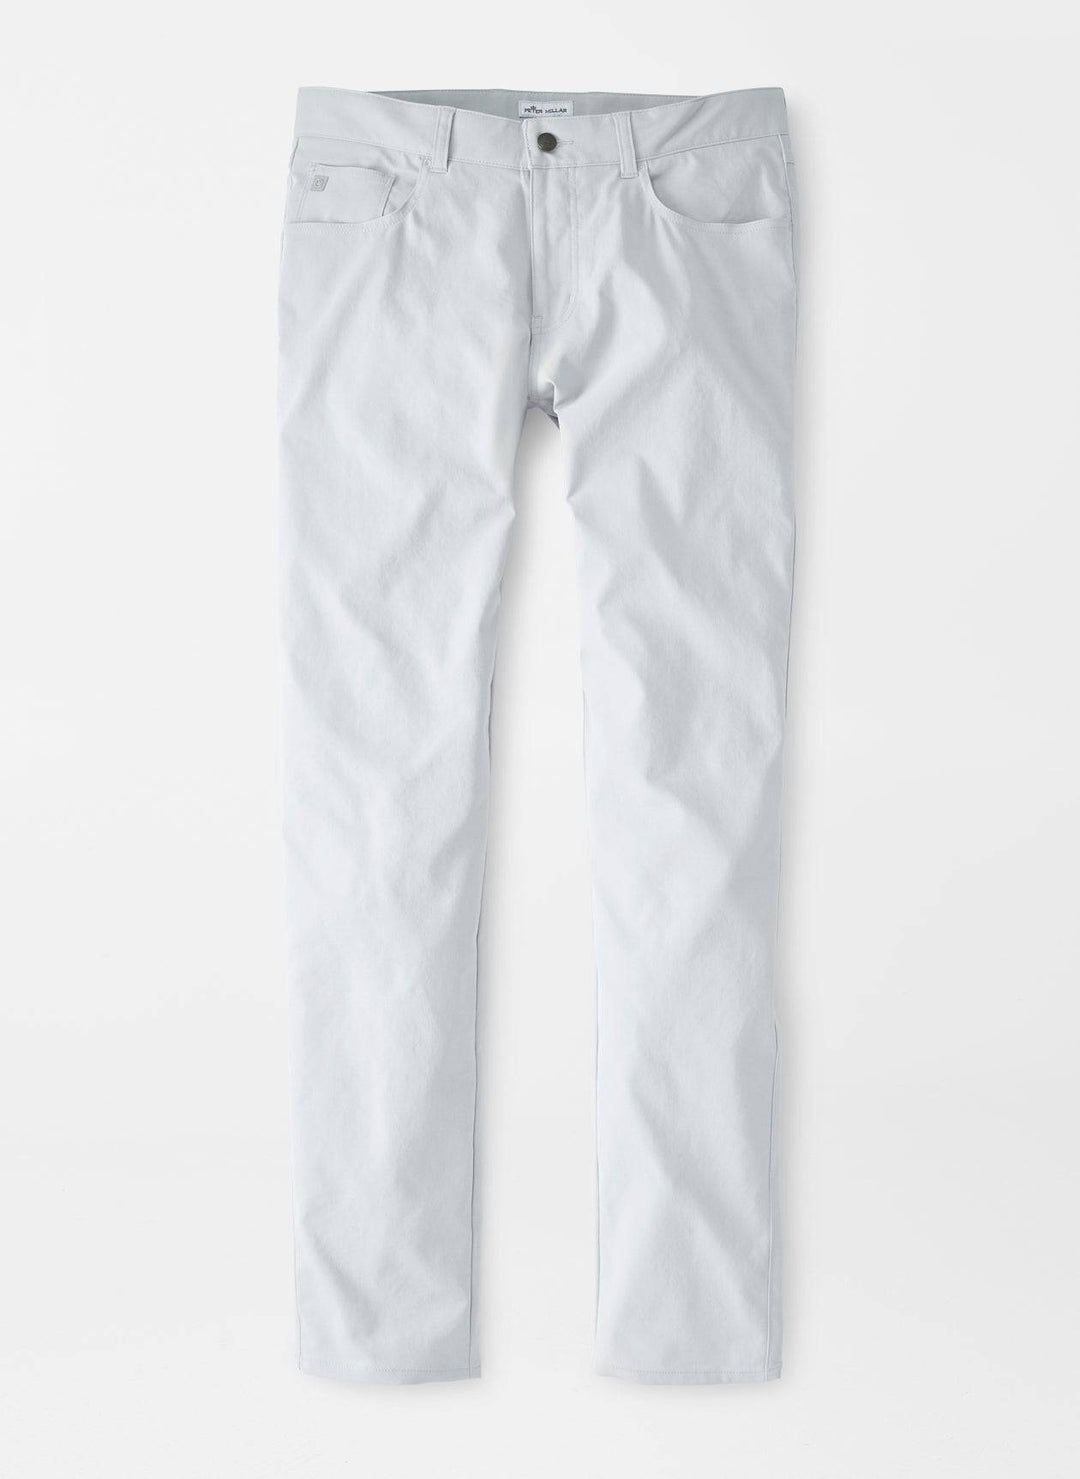 Peter Millar eb66 Performance Five-Pocket Pant In Gale Grey